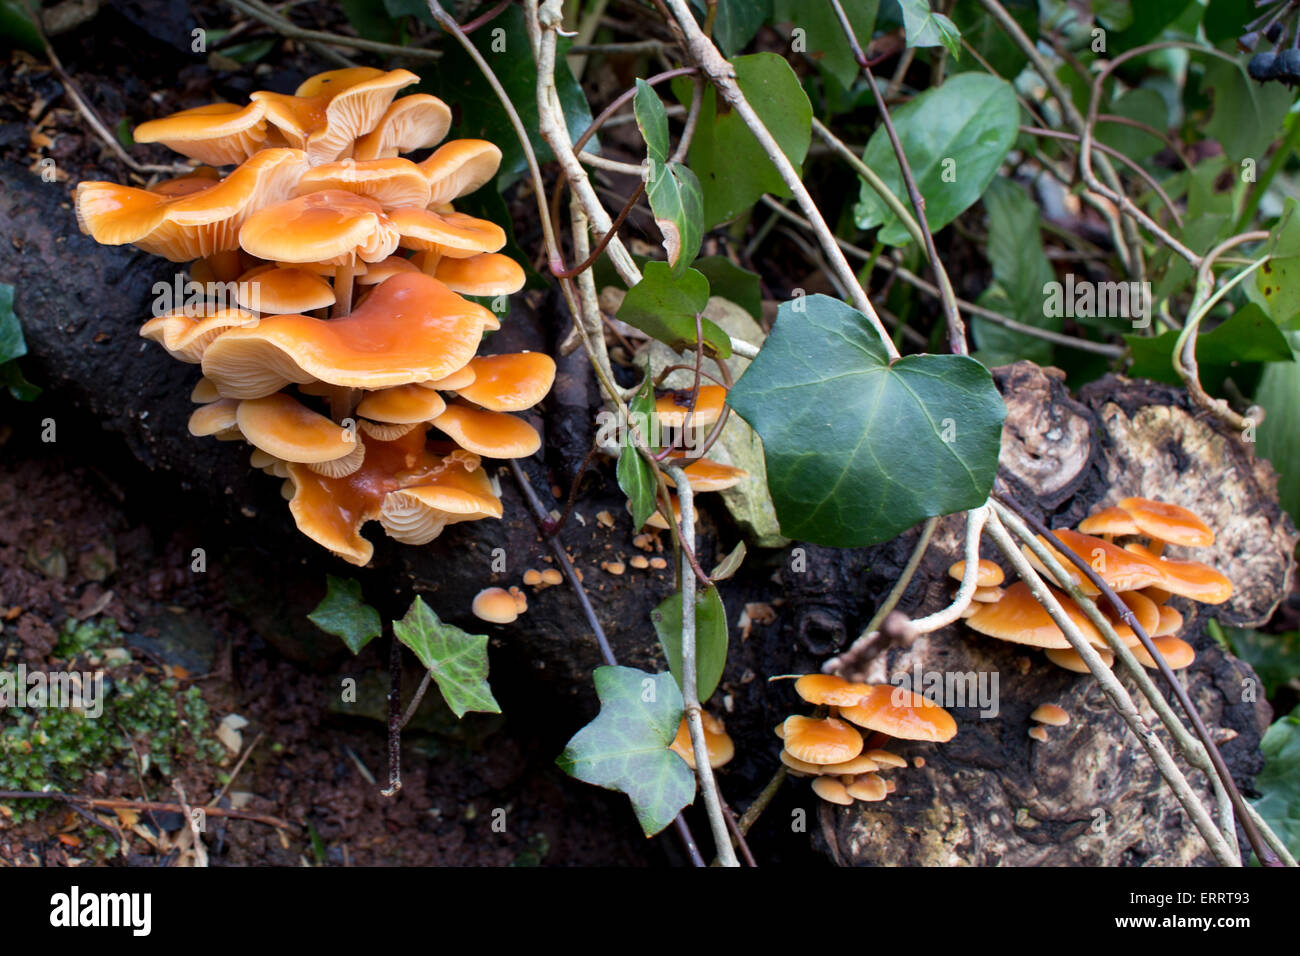 Bracket Fungus growing on a decaying log, Avon Gorge, Bristol, England, UK. Stock Photo